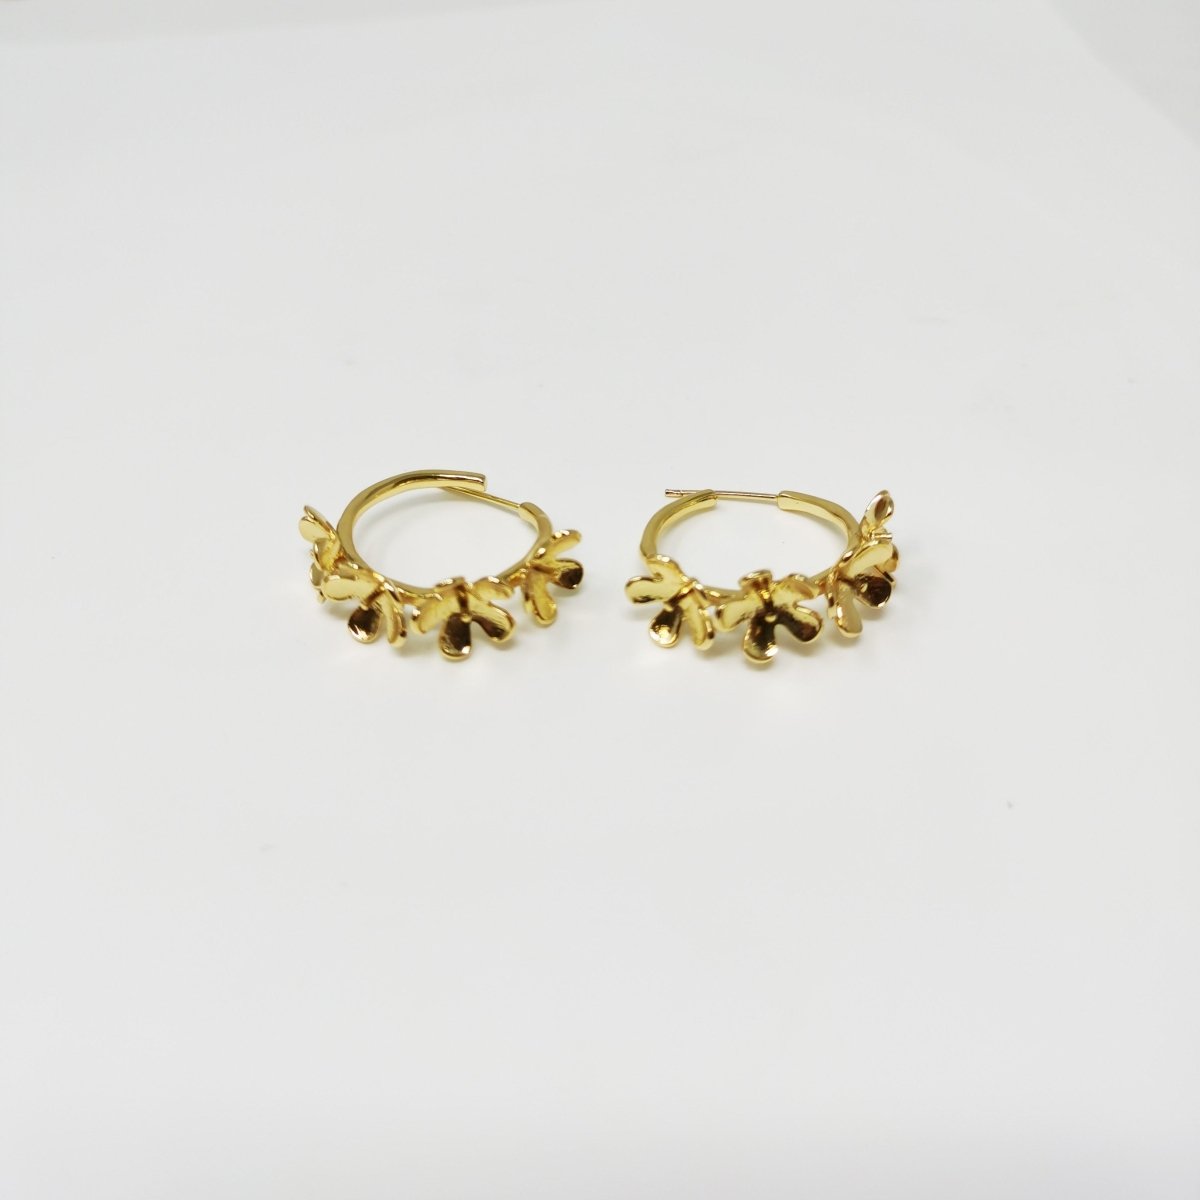 24k Vermeil Gold Earrings, Hoop Earrings, Medium Hoop, Floral Earring, Gift for Her, Earrings for Women, Everyday Wear Earrings, K-620 - DLUXCA